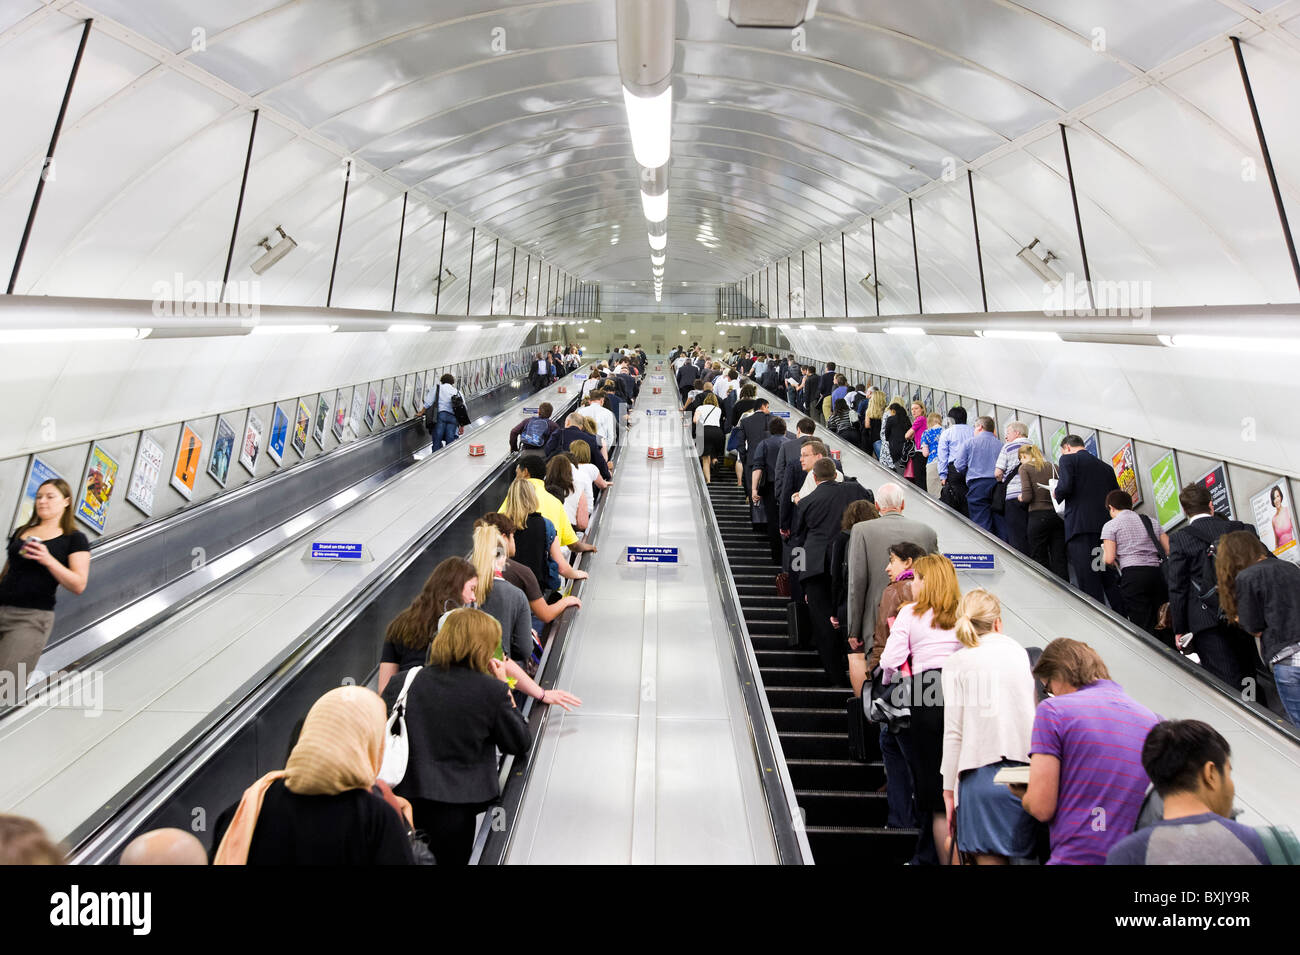 London Underground escalators at Holborn station during rush hour, UK Stock Photo